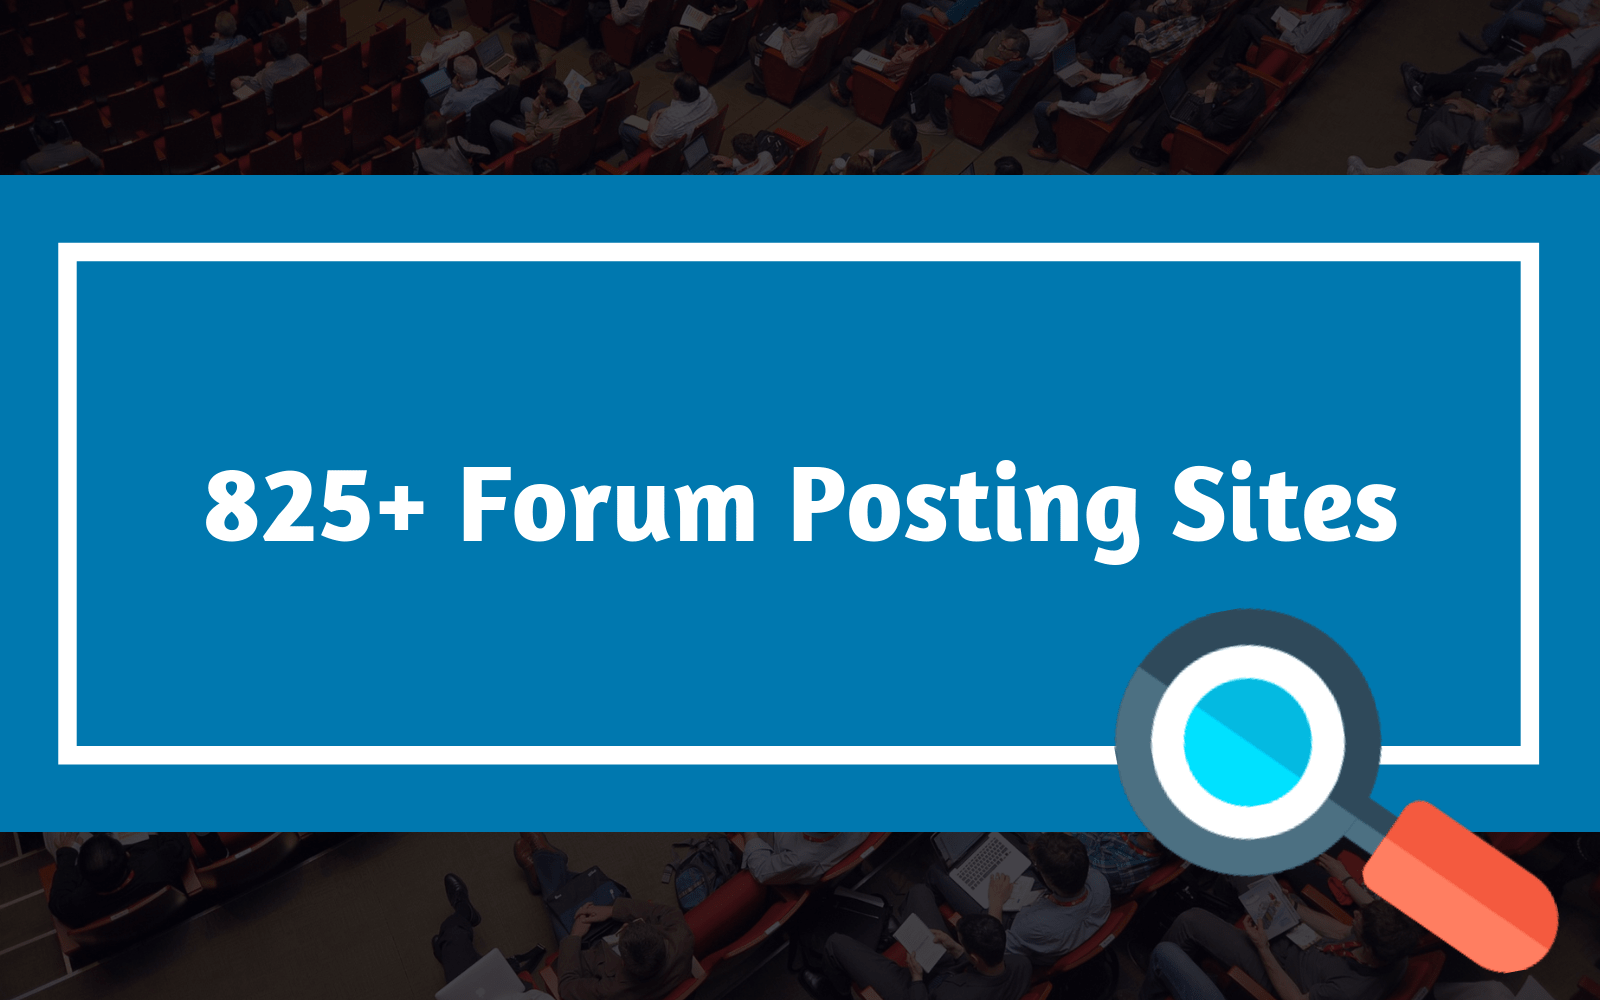 Forum Posting Sites List